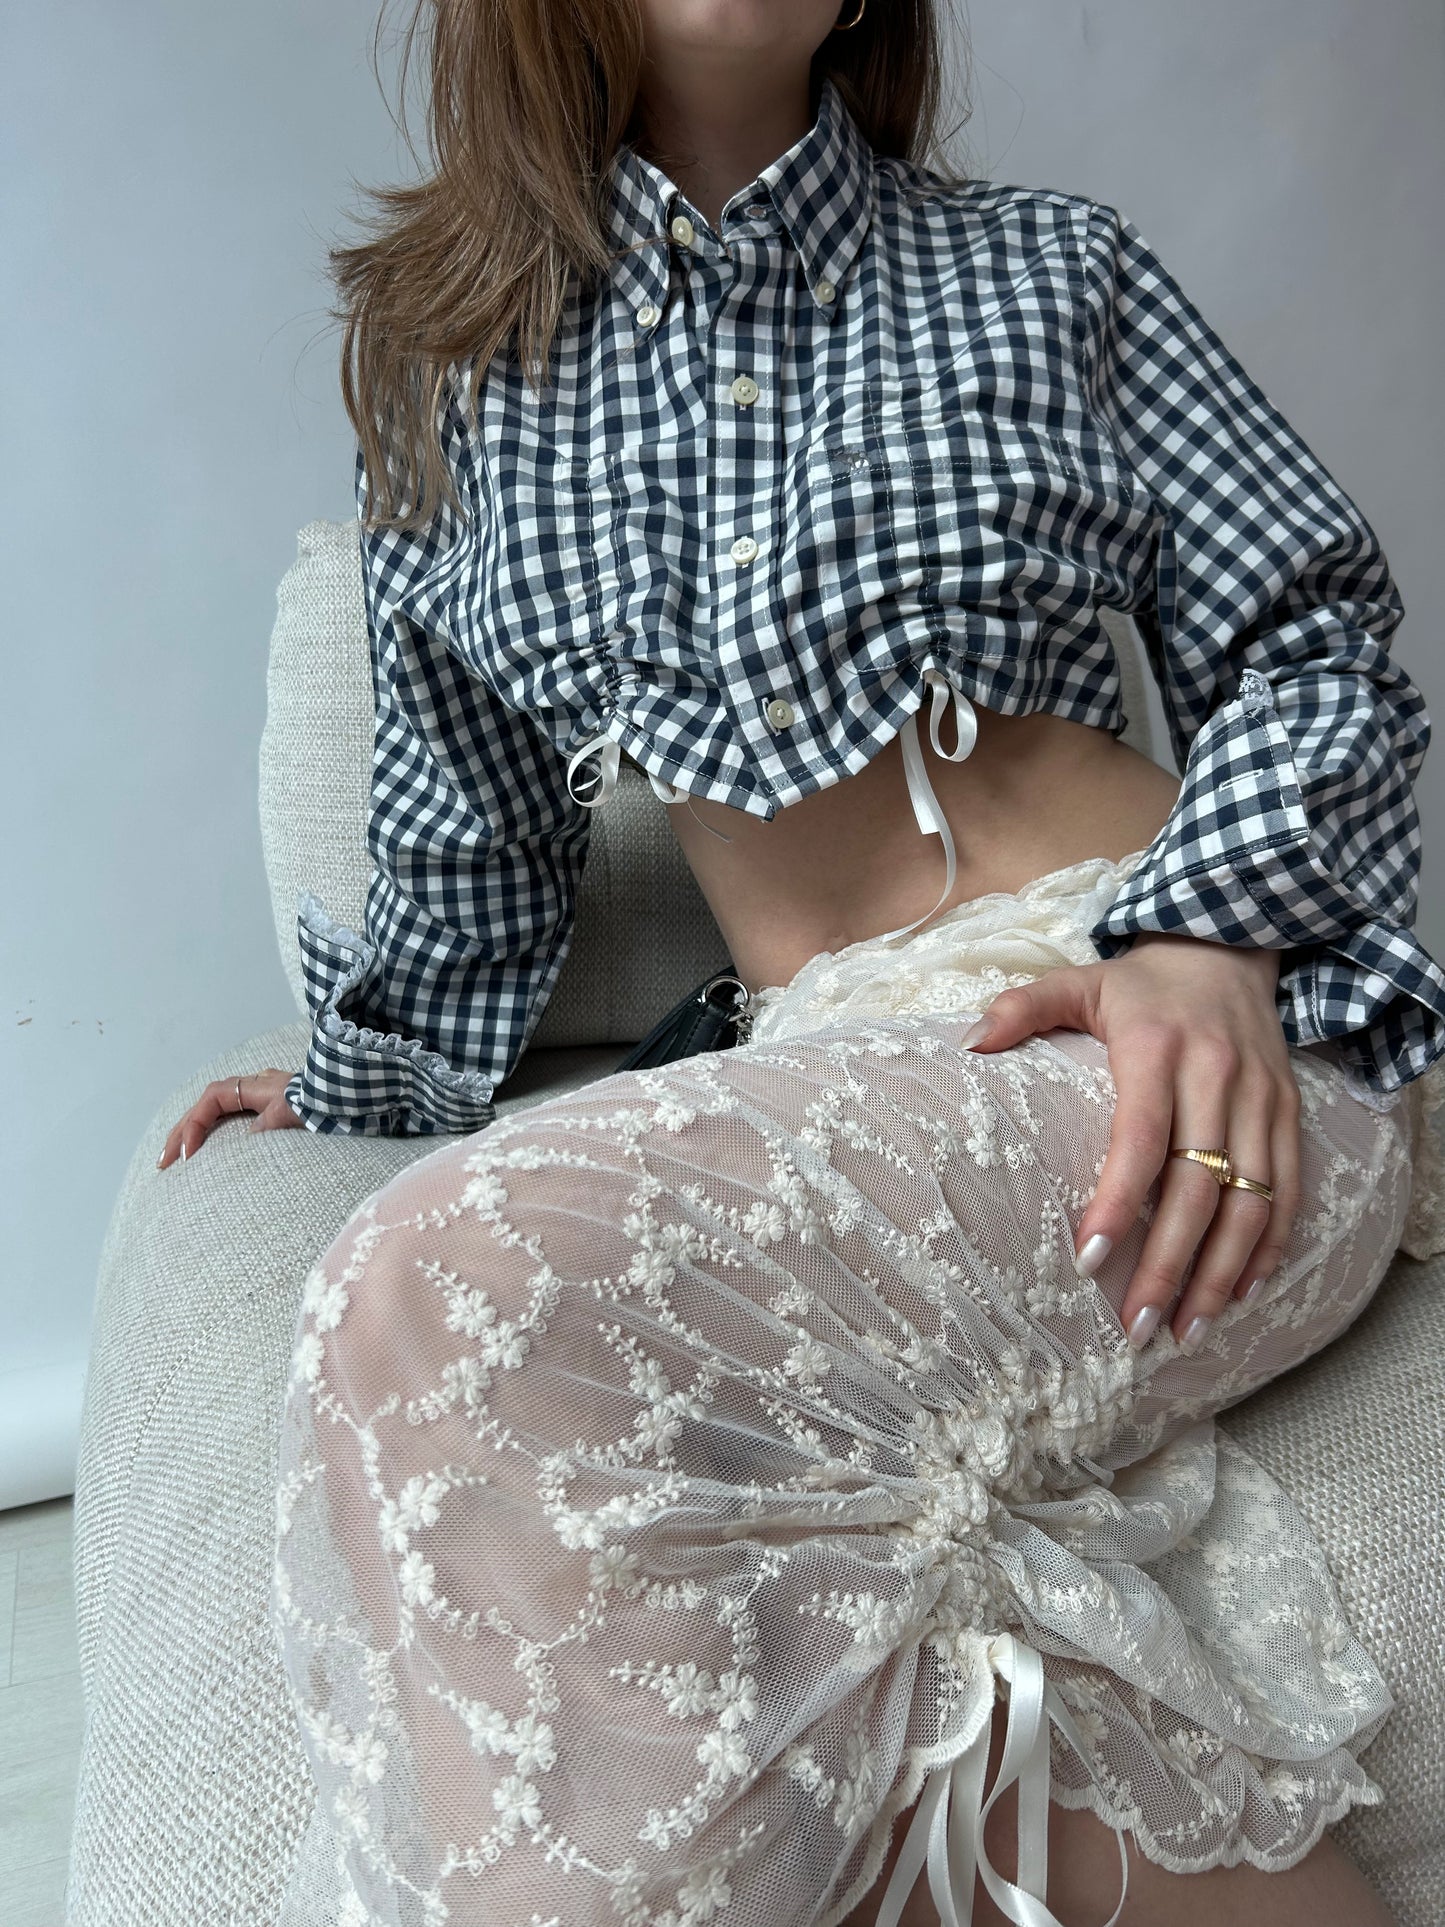 Lorelai Lace skirt